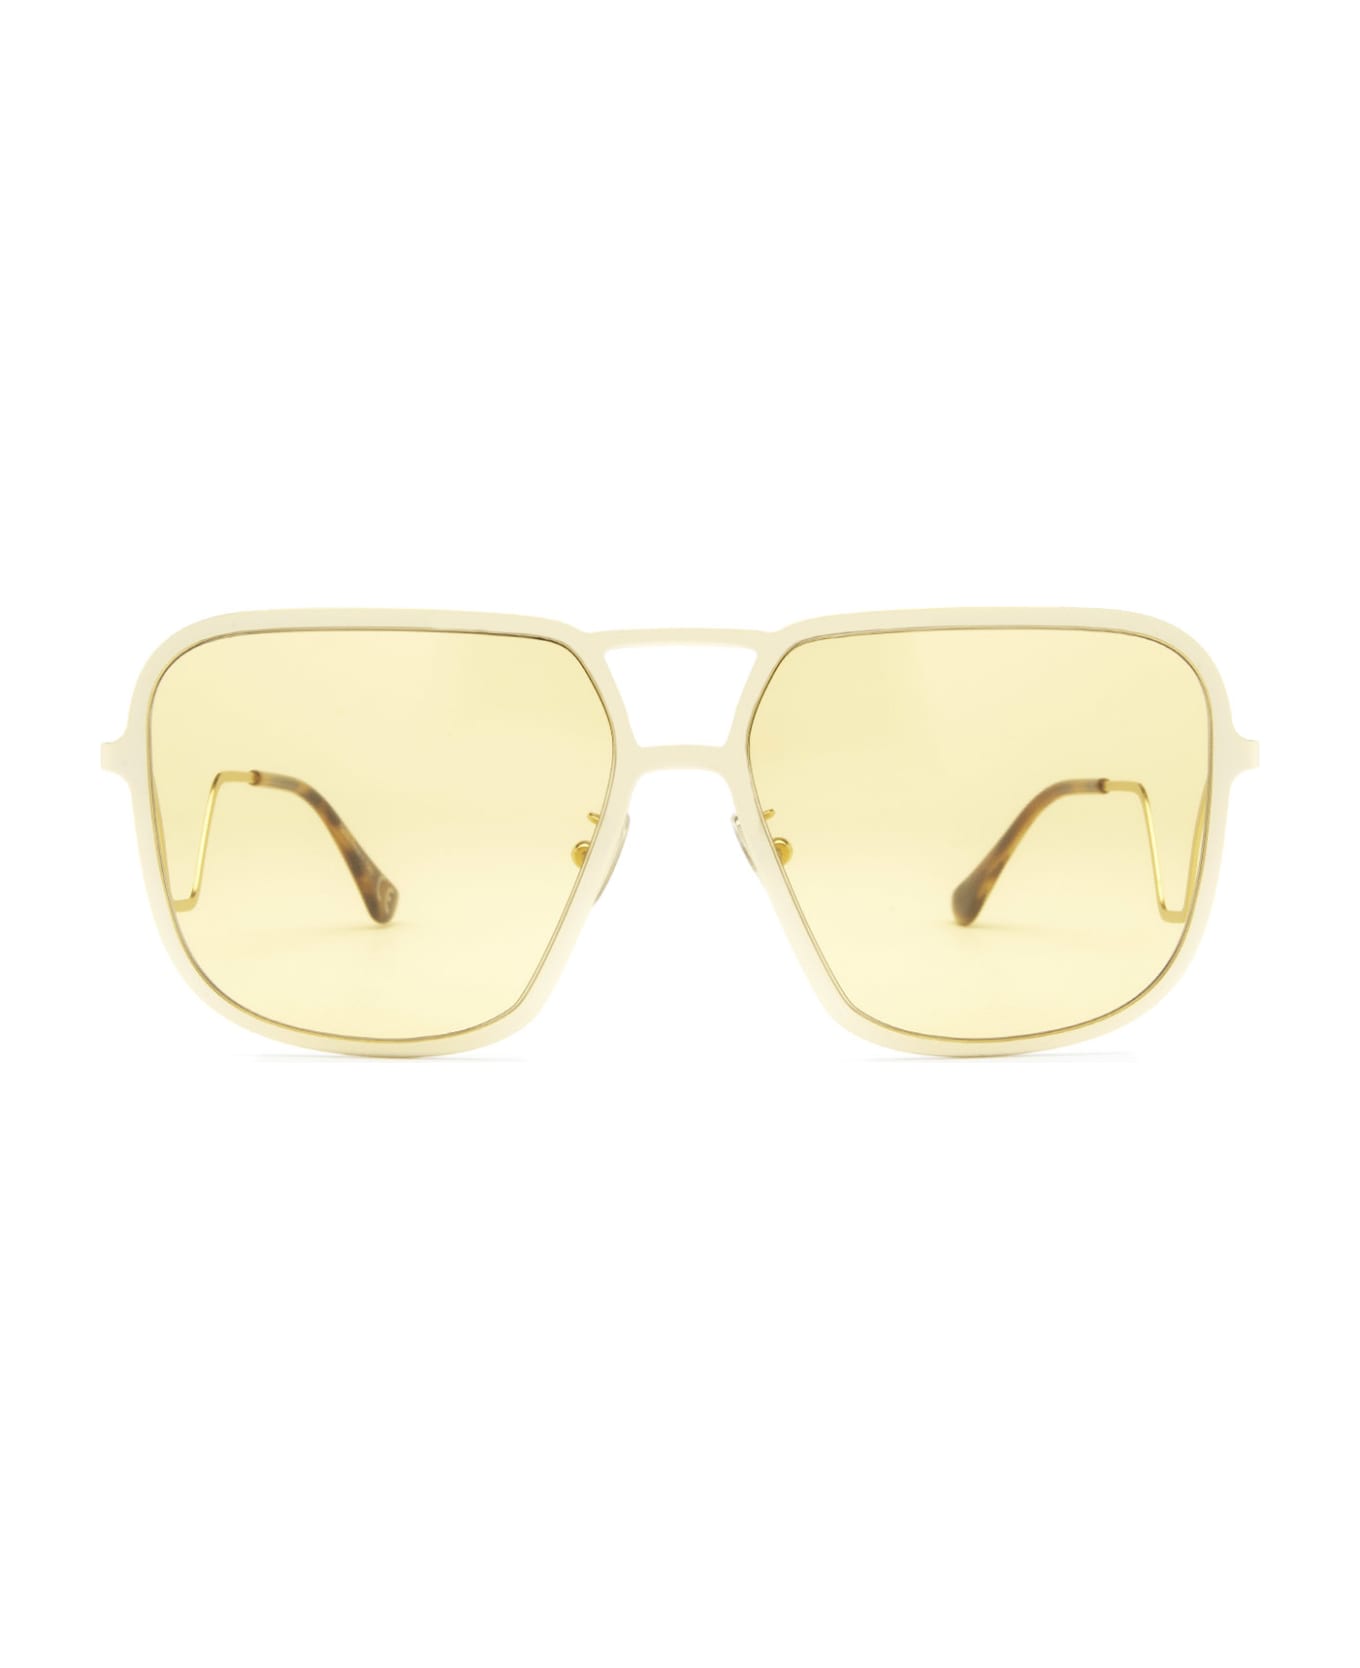 Marni Eyewear Ha Long Bay Yellow Sunglasses POLARIZED - Yellow